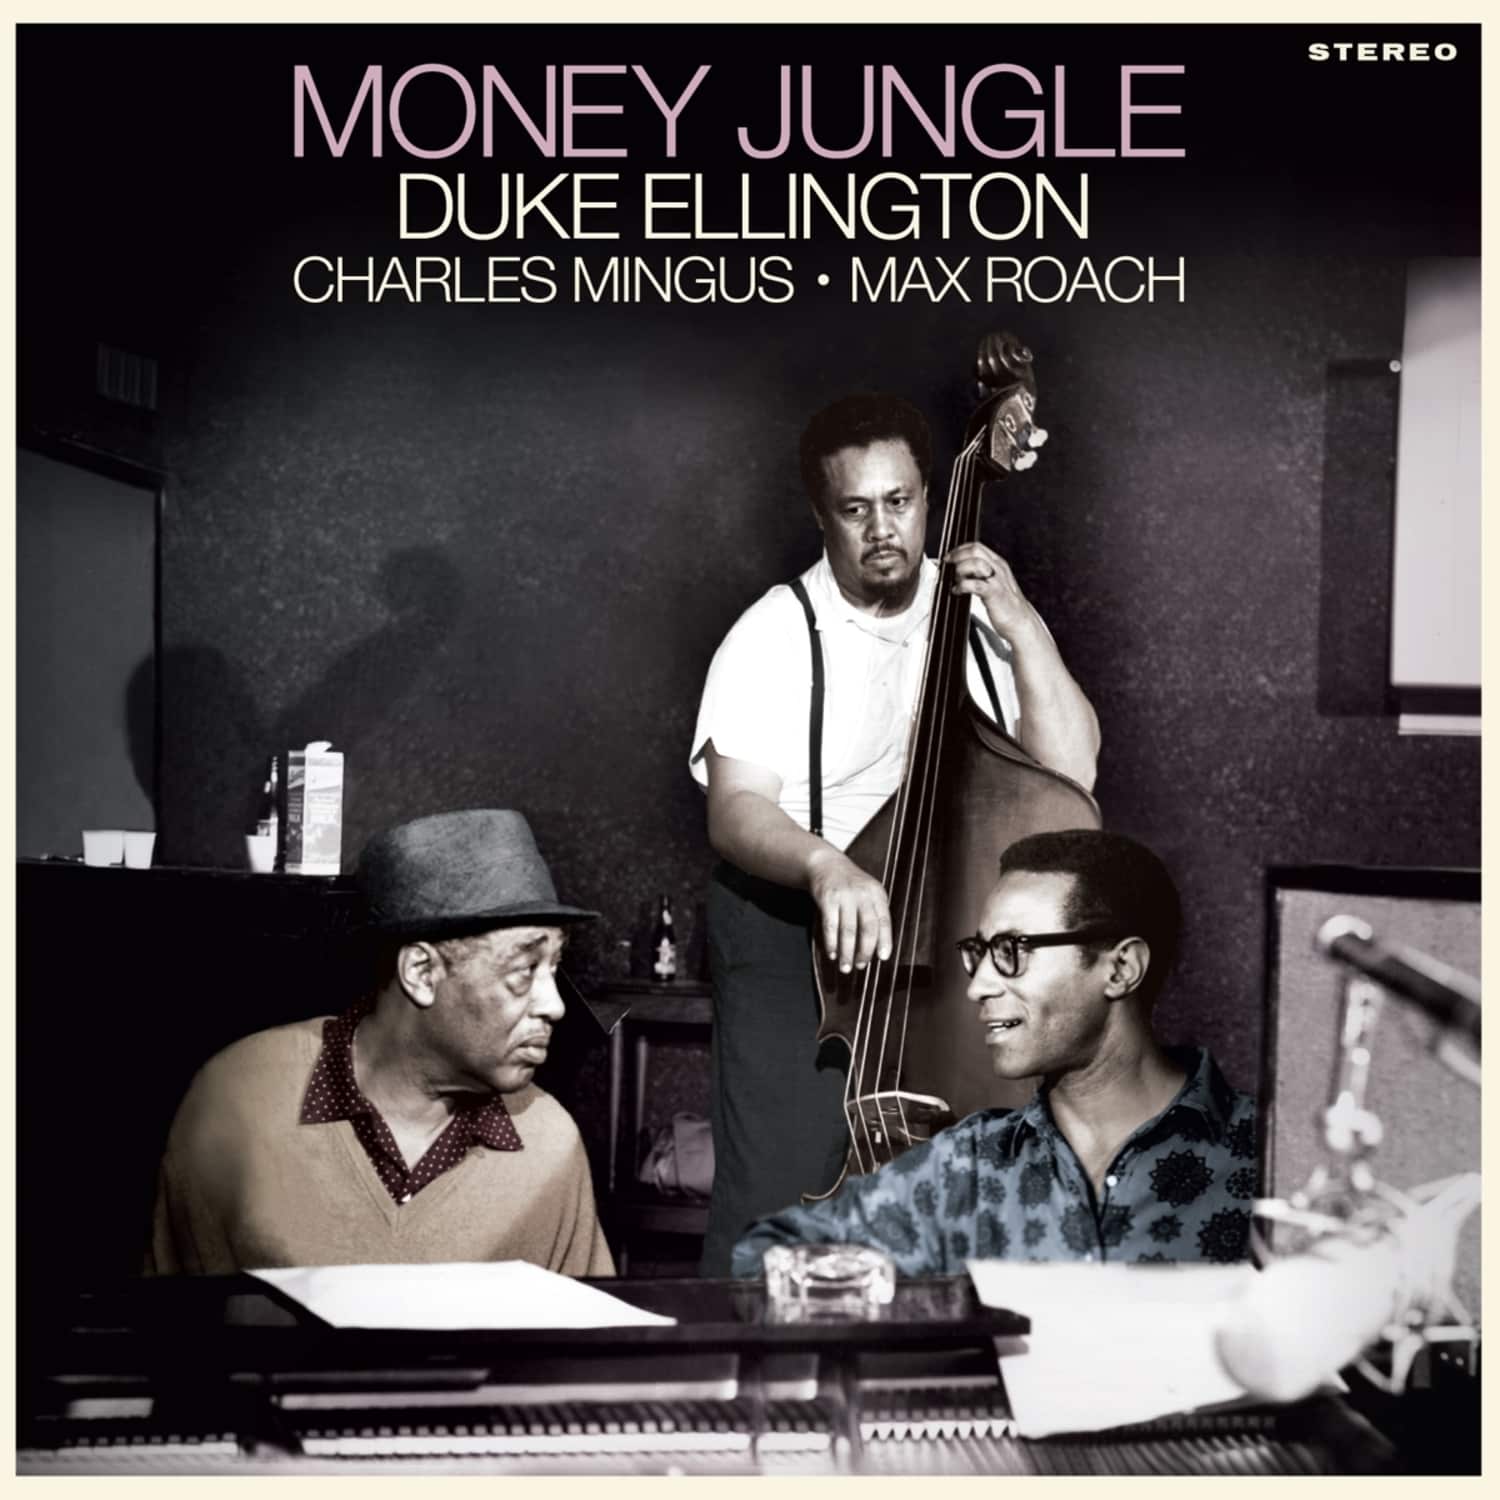 Duke Ellington & Charles Mingus & Max Roach - MONEY JUNGLE 